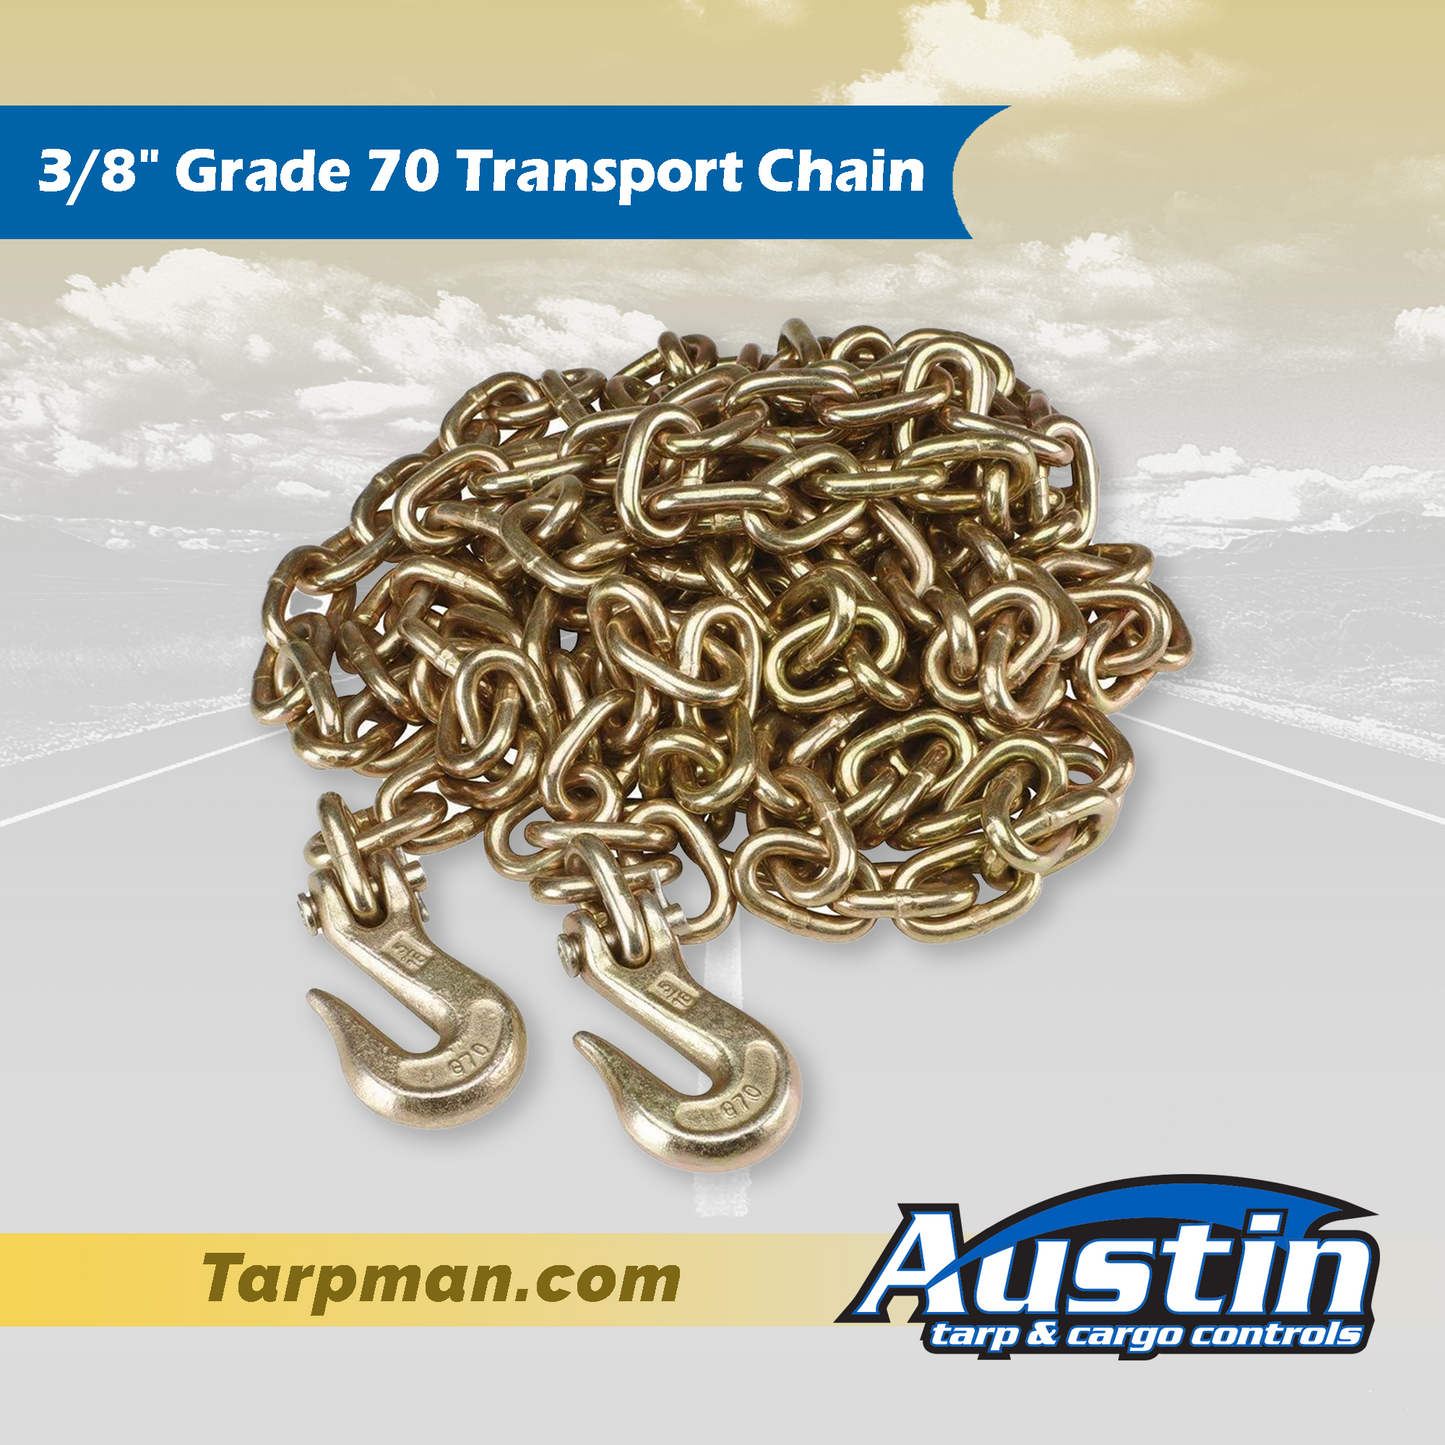 3/8" Grade 70 Transport Chain Tarpman.com | Austin Tarp & Cargo Controls